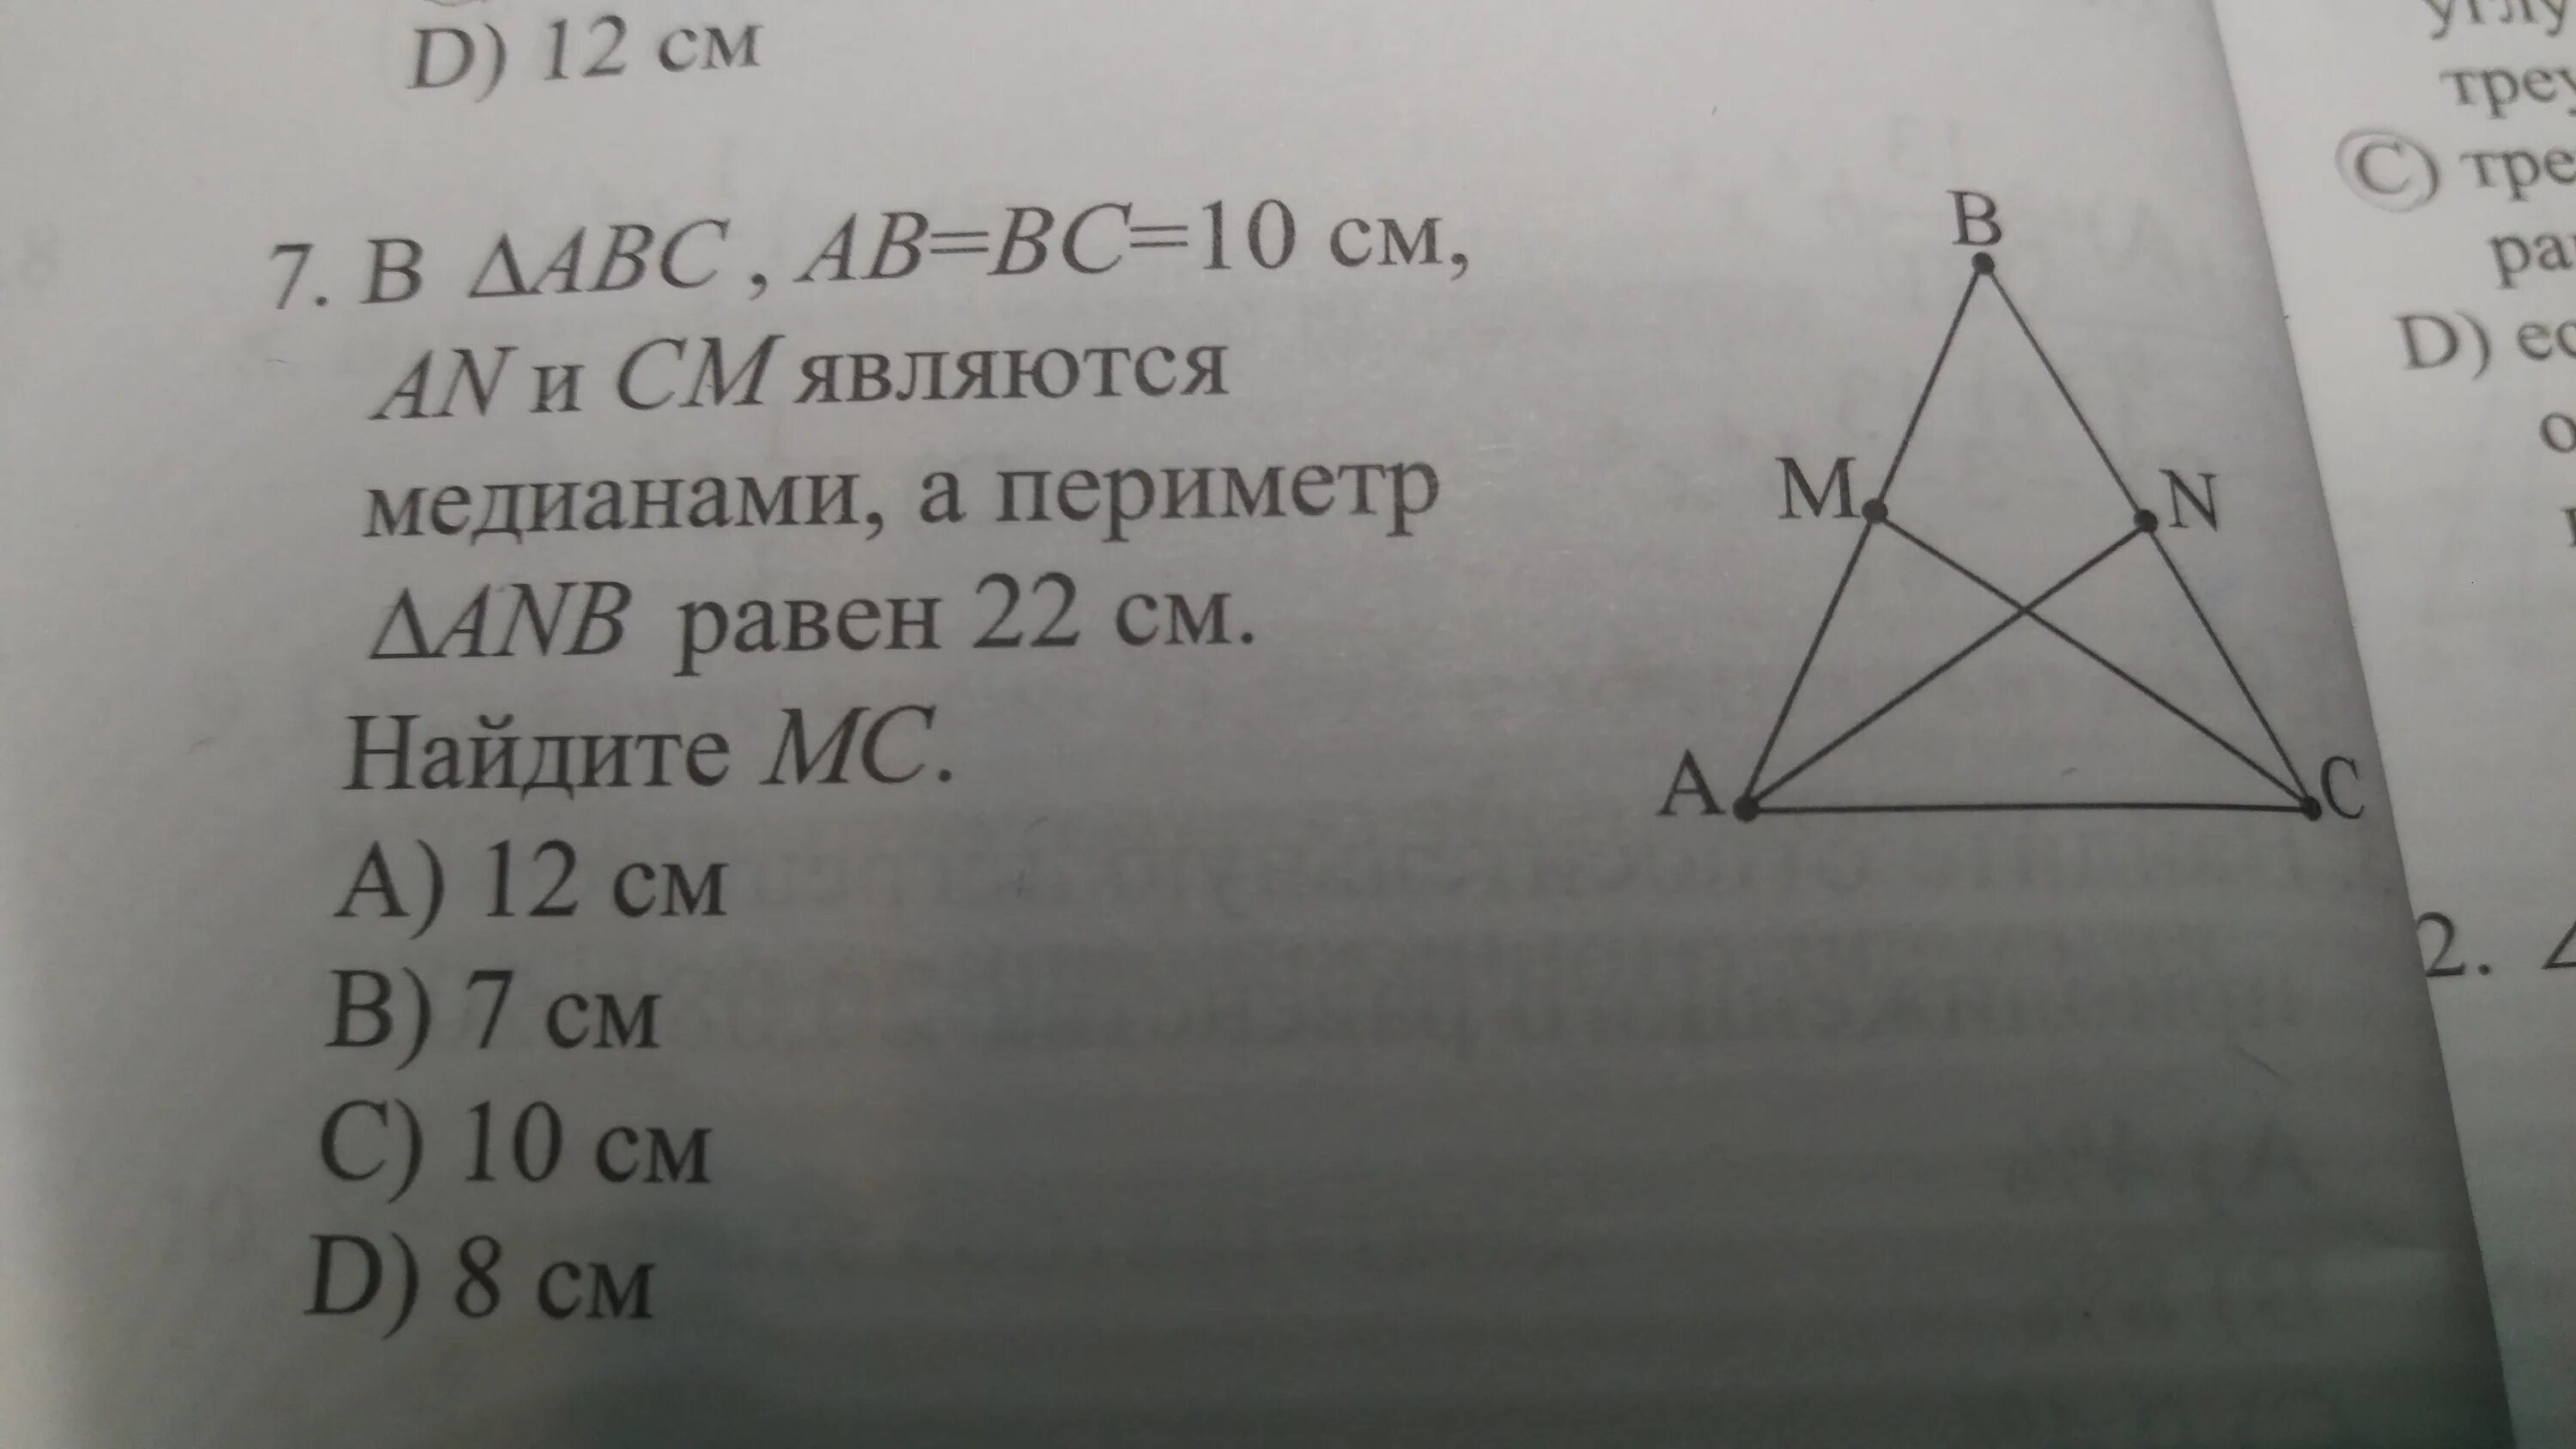 Ab равно 12 сантиметров найти bc. В треугольнике ABC ab равно BC. Треугольника ab=BC=10см. Найти ab,BC. N 108 периметр равнобедренного треугольника ABC И основанием BC равен 40 см.